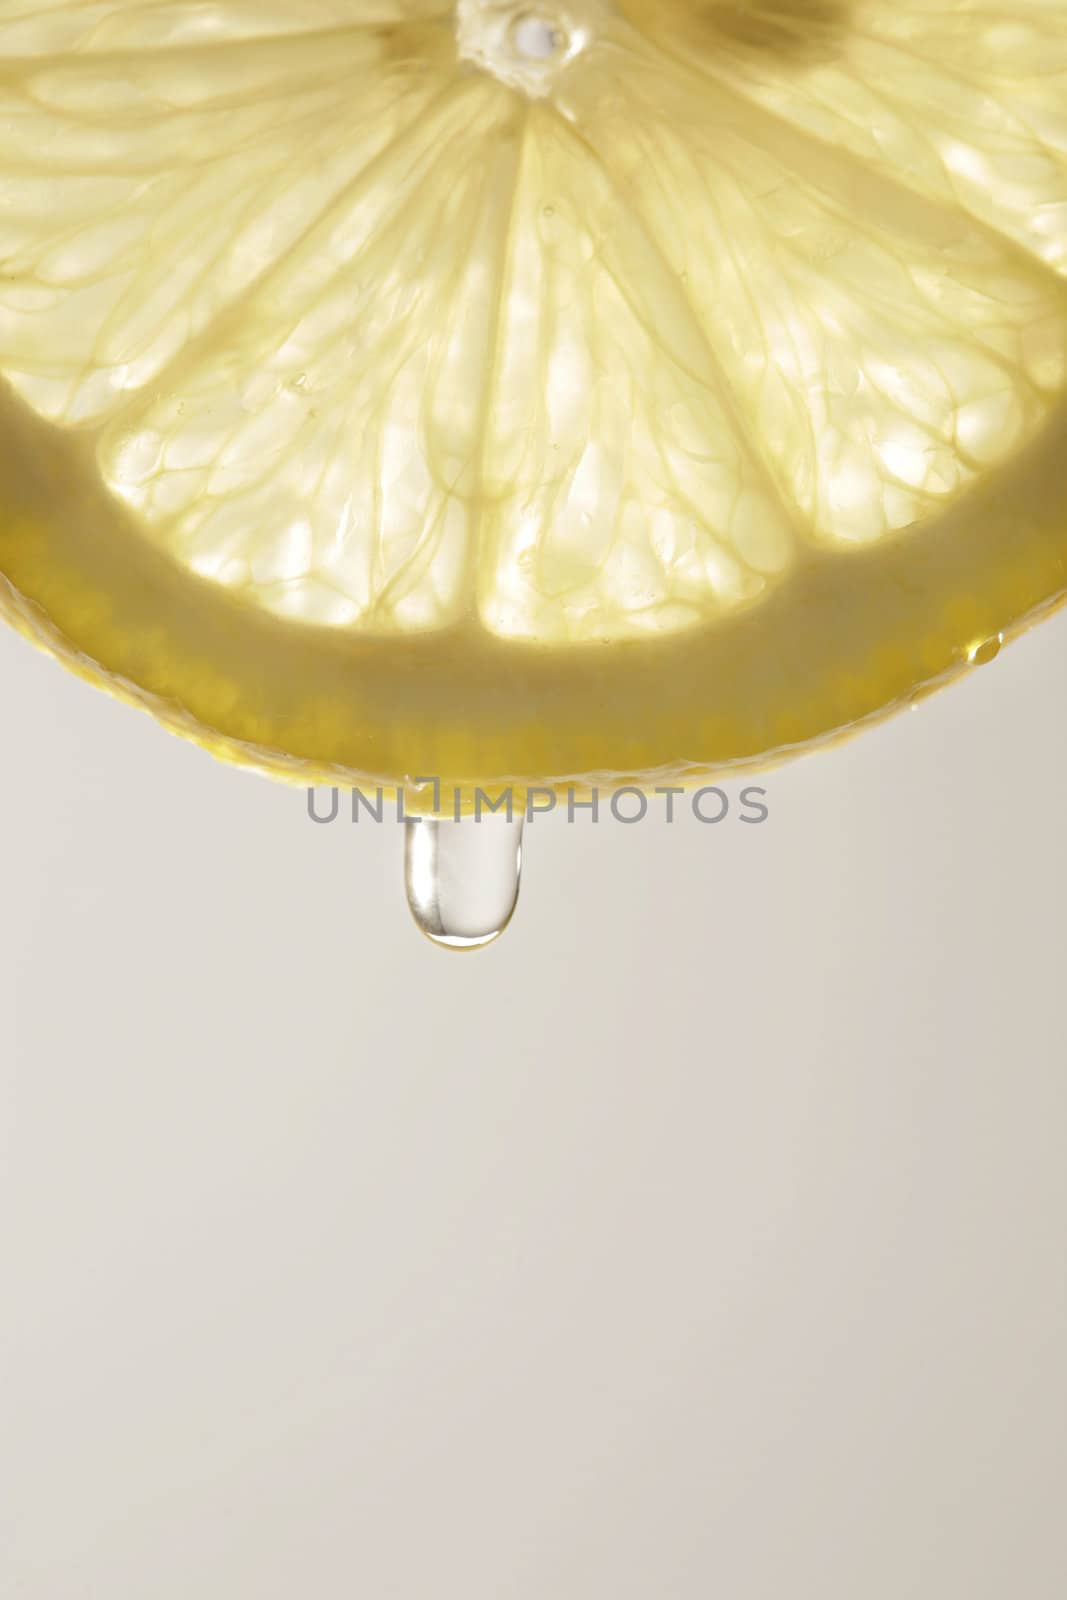 detail of lemon slice with juice drop